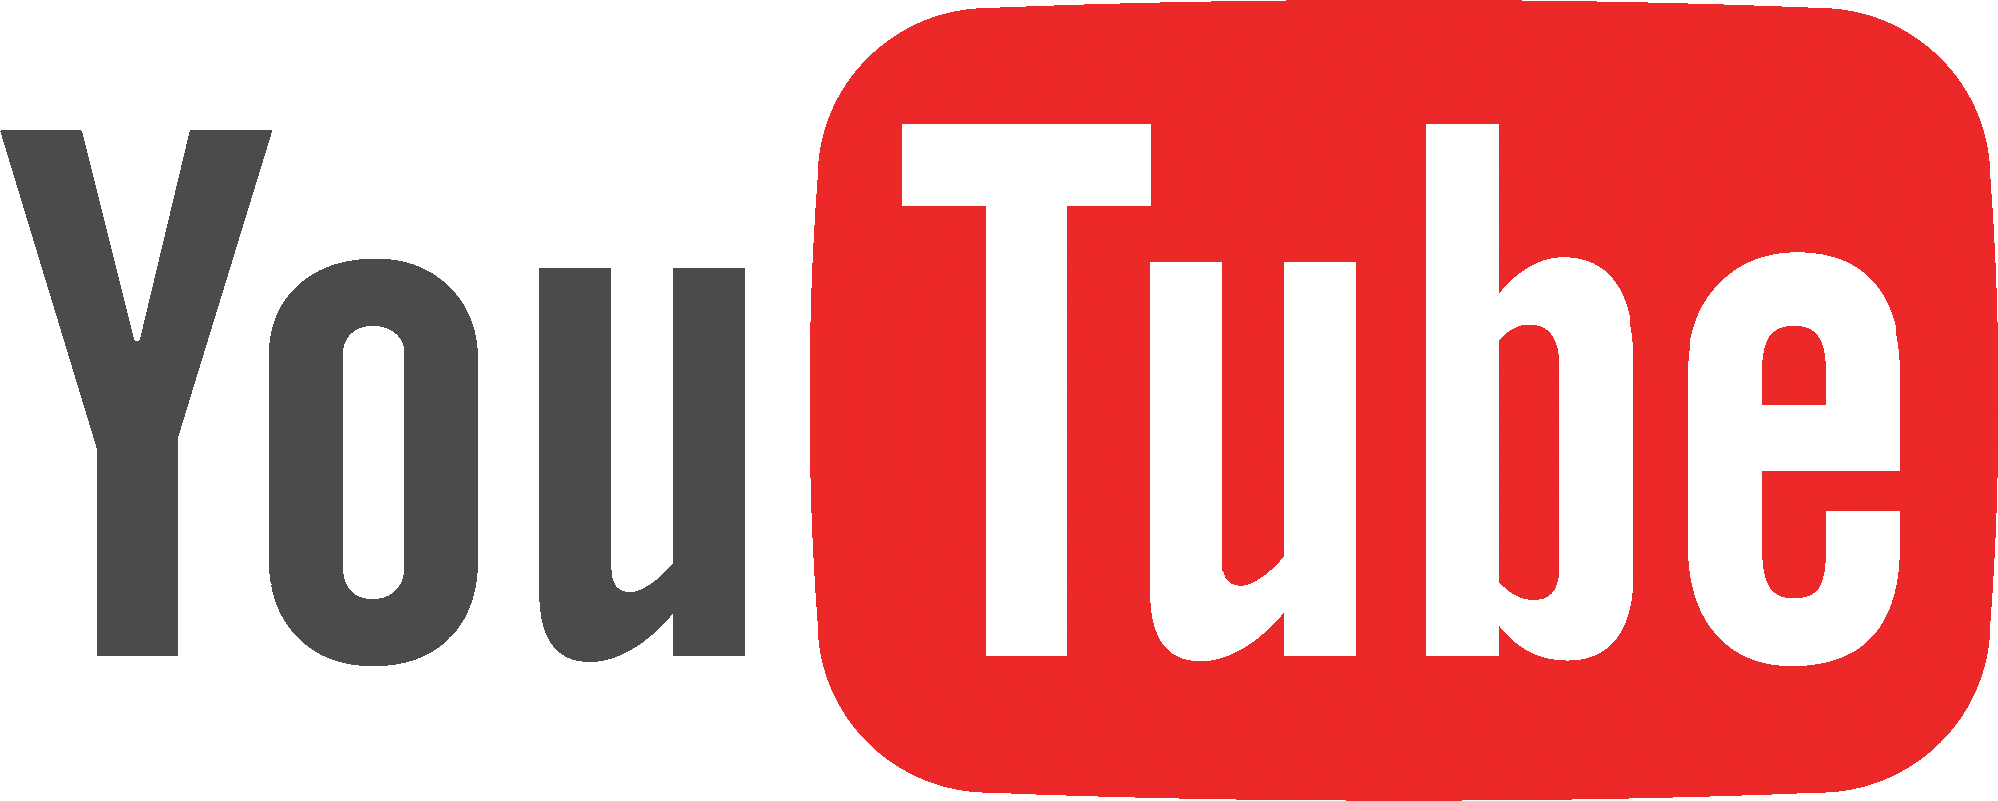 thumbnail of YouTube logo